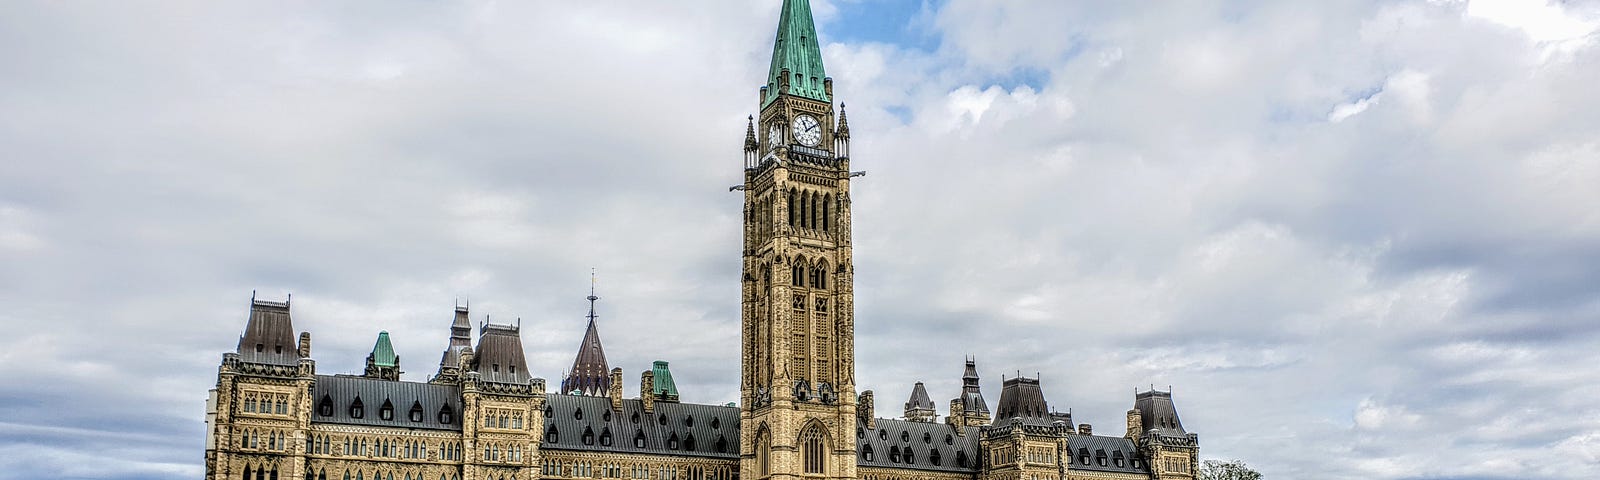 Canada’s National Legislature “Parliament Hill” in Ottawa Ontario